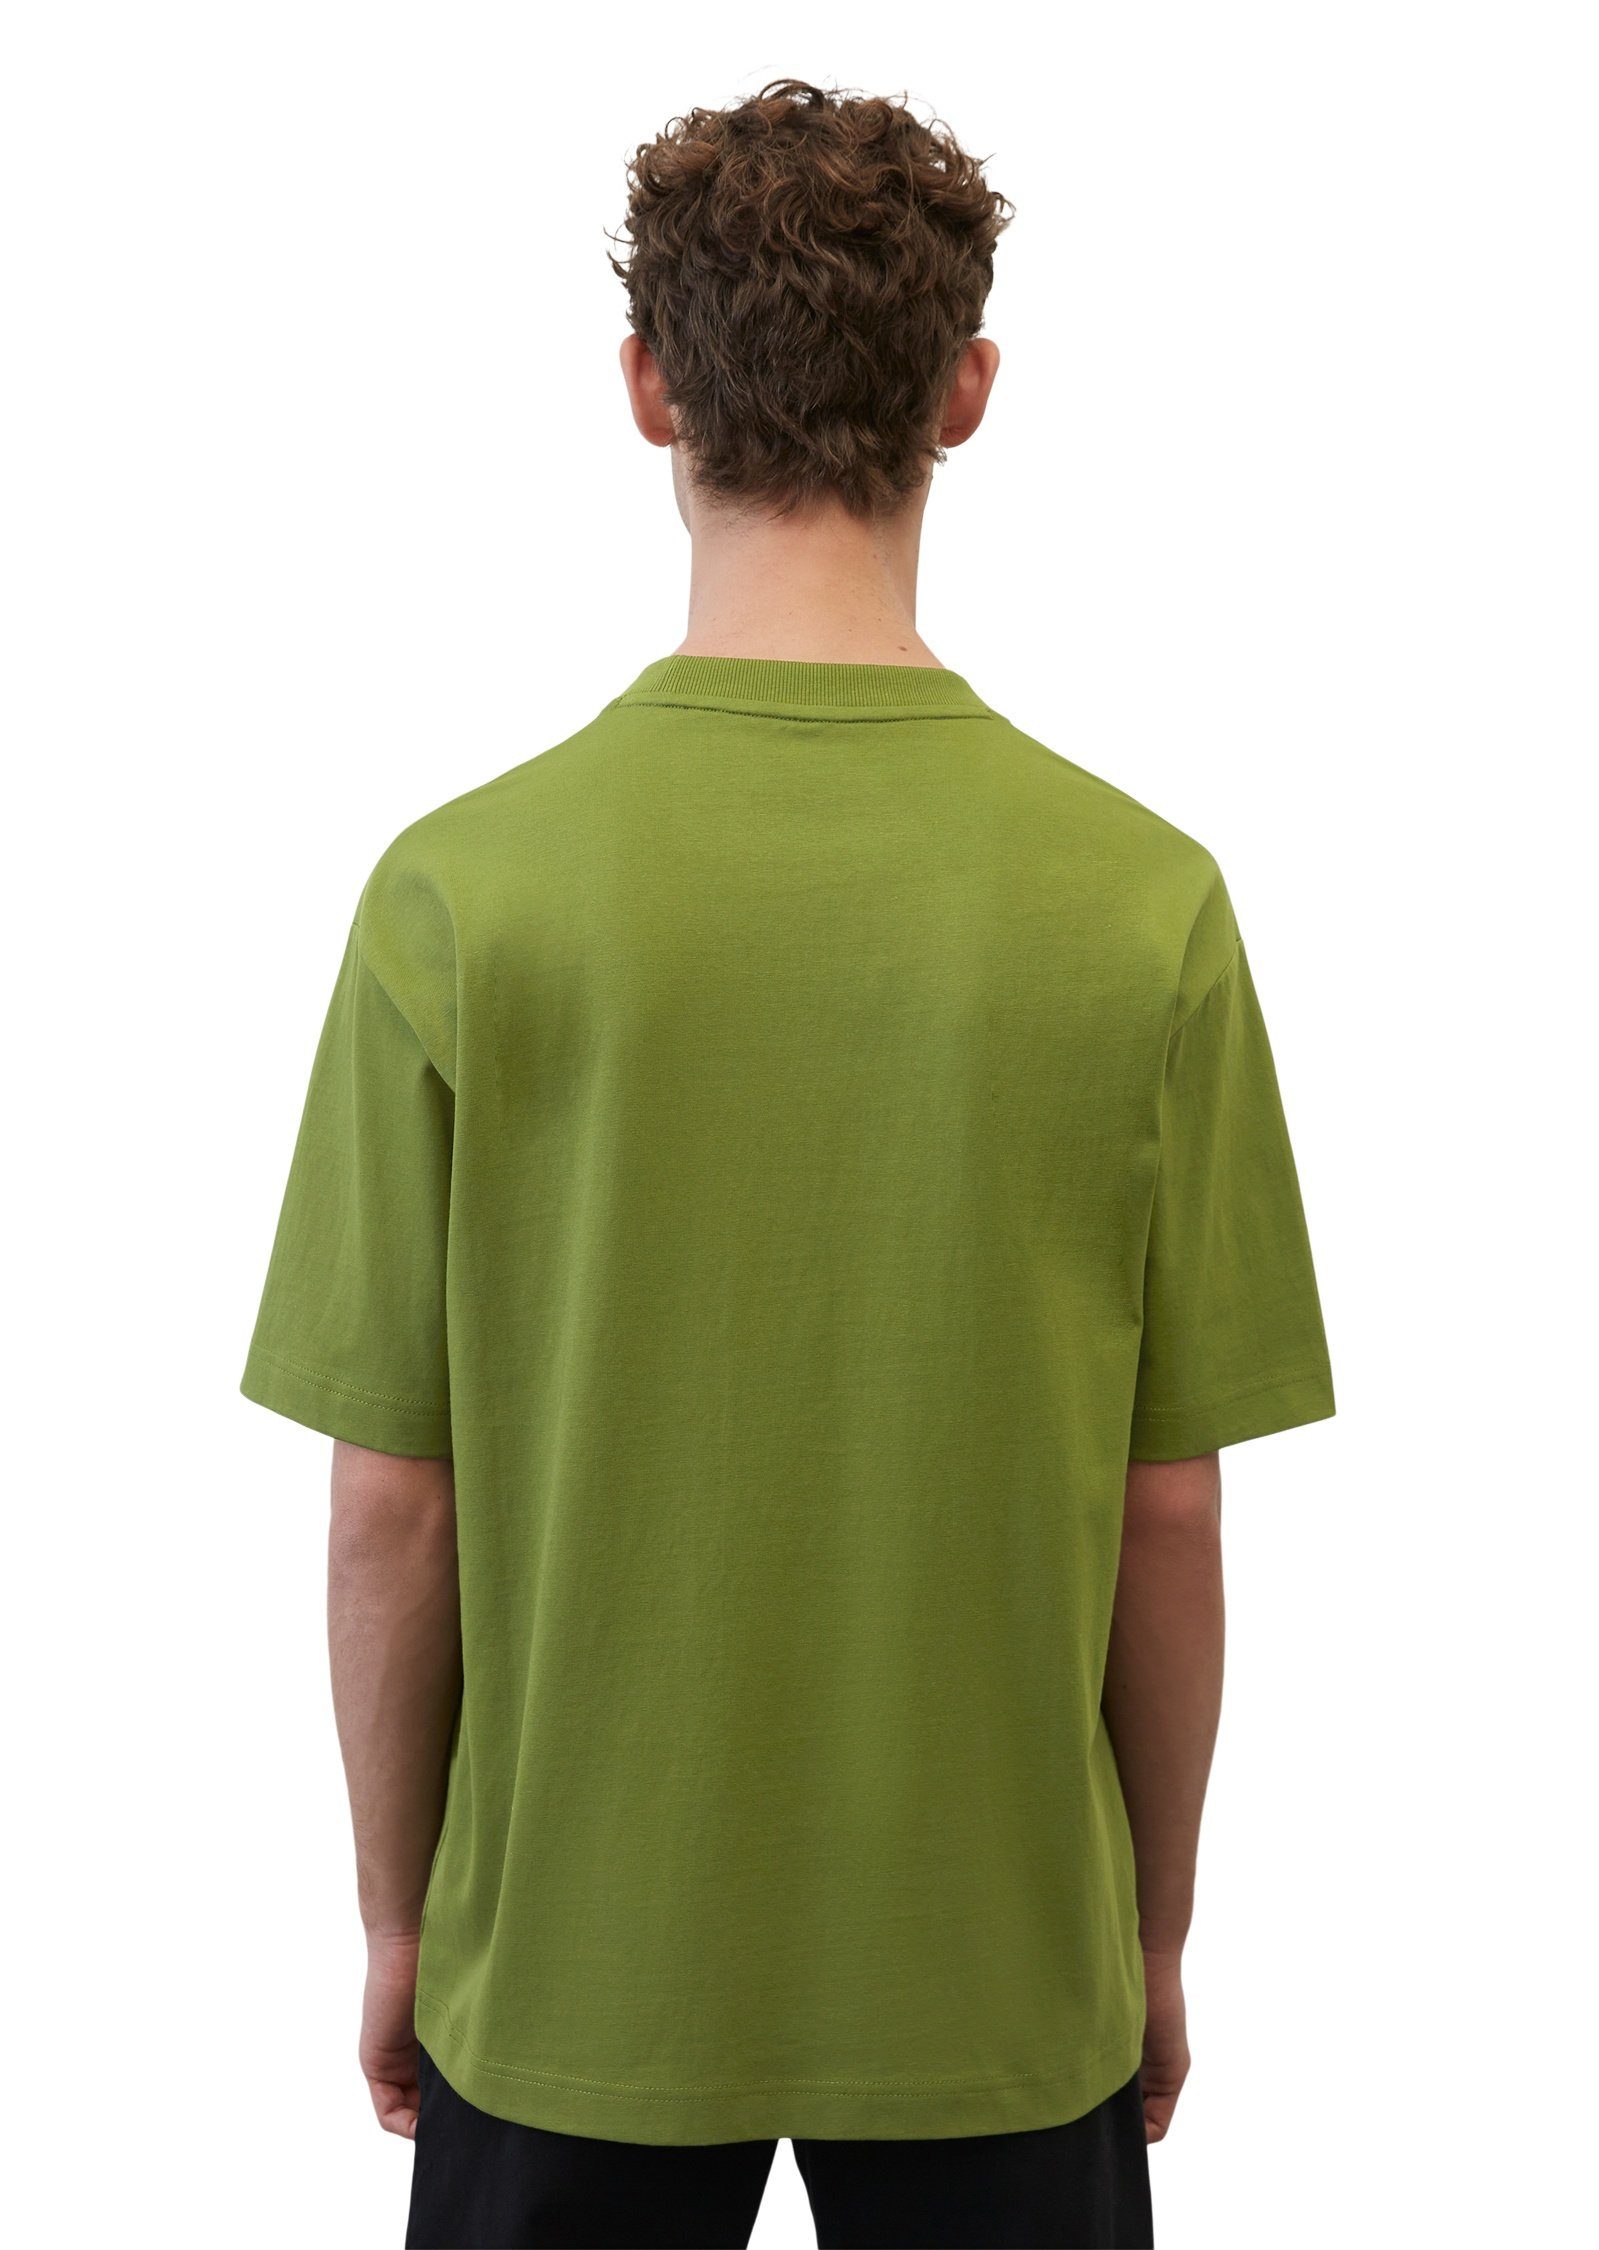 Marc O'Polo hochwertiger T-Shirt dunkelgrün Bio-Baumwolle aus